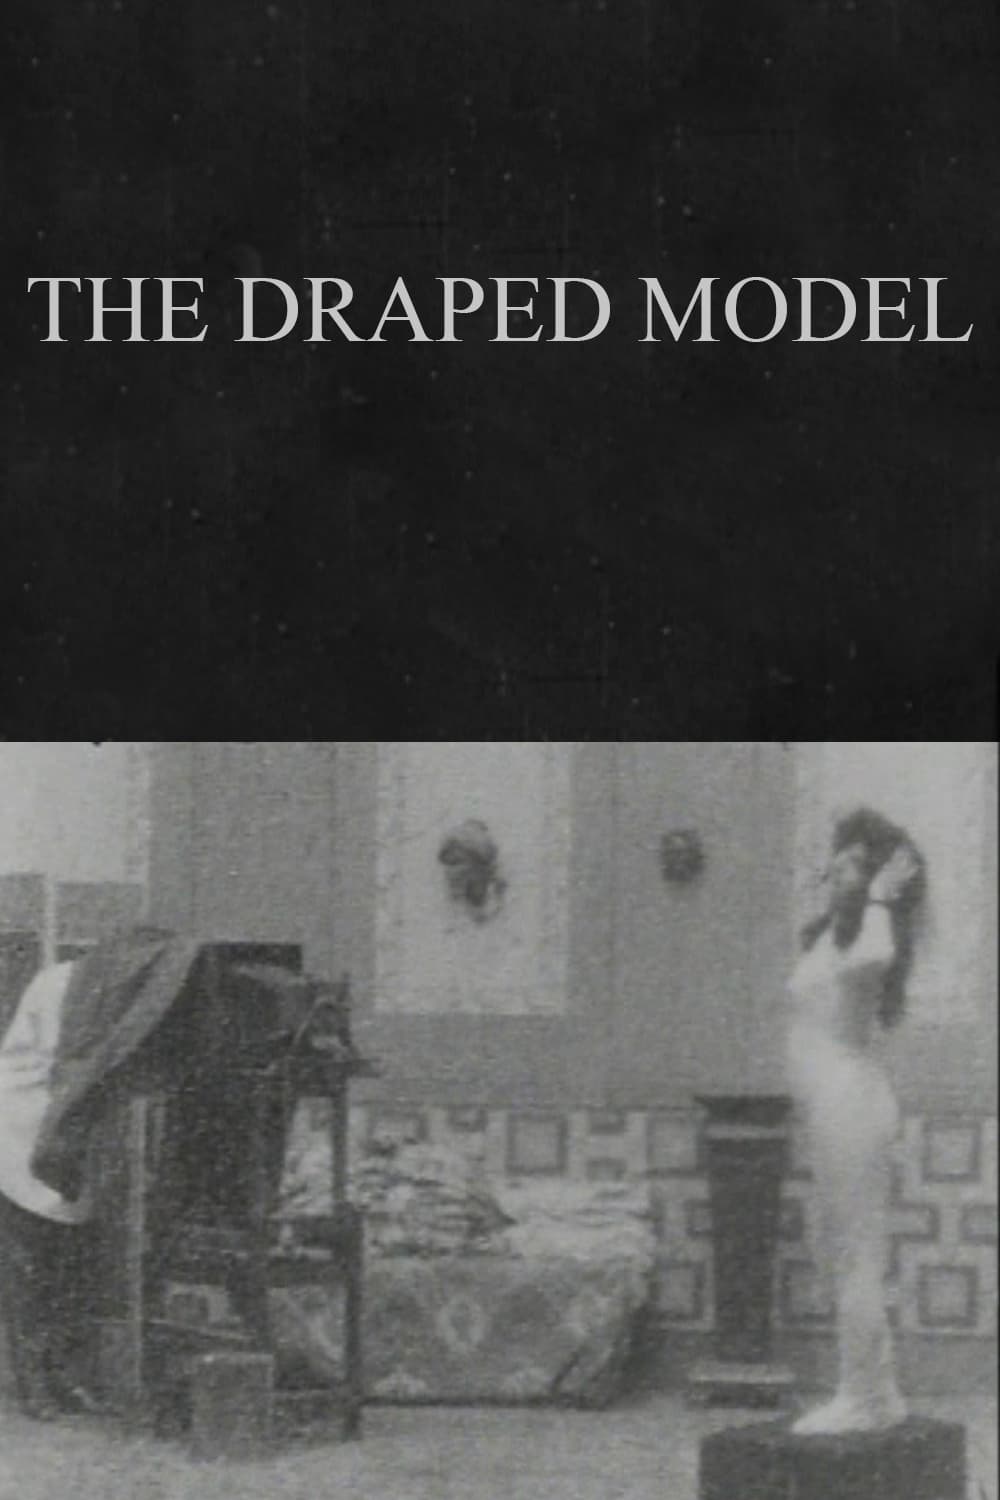 The Draped Model